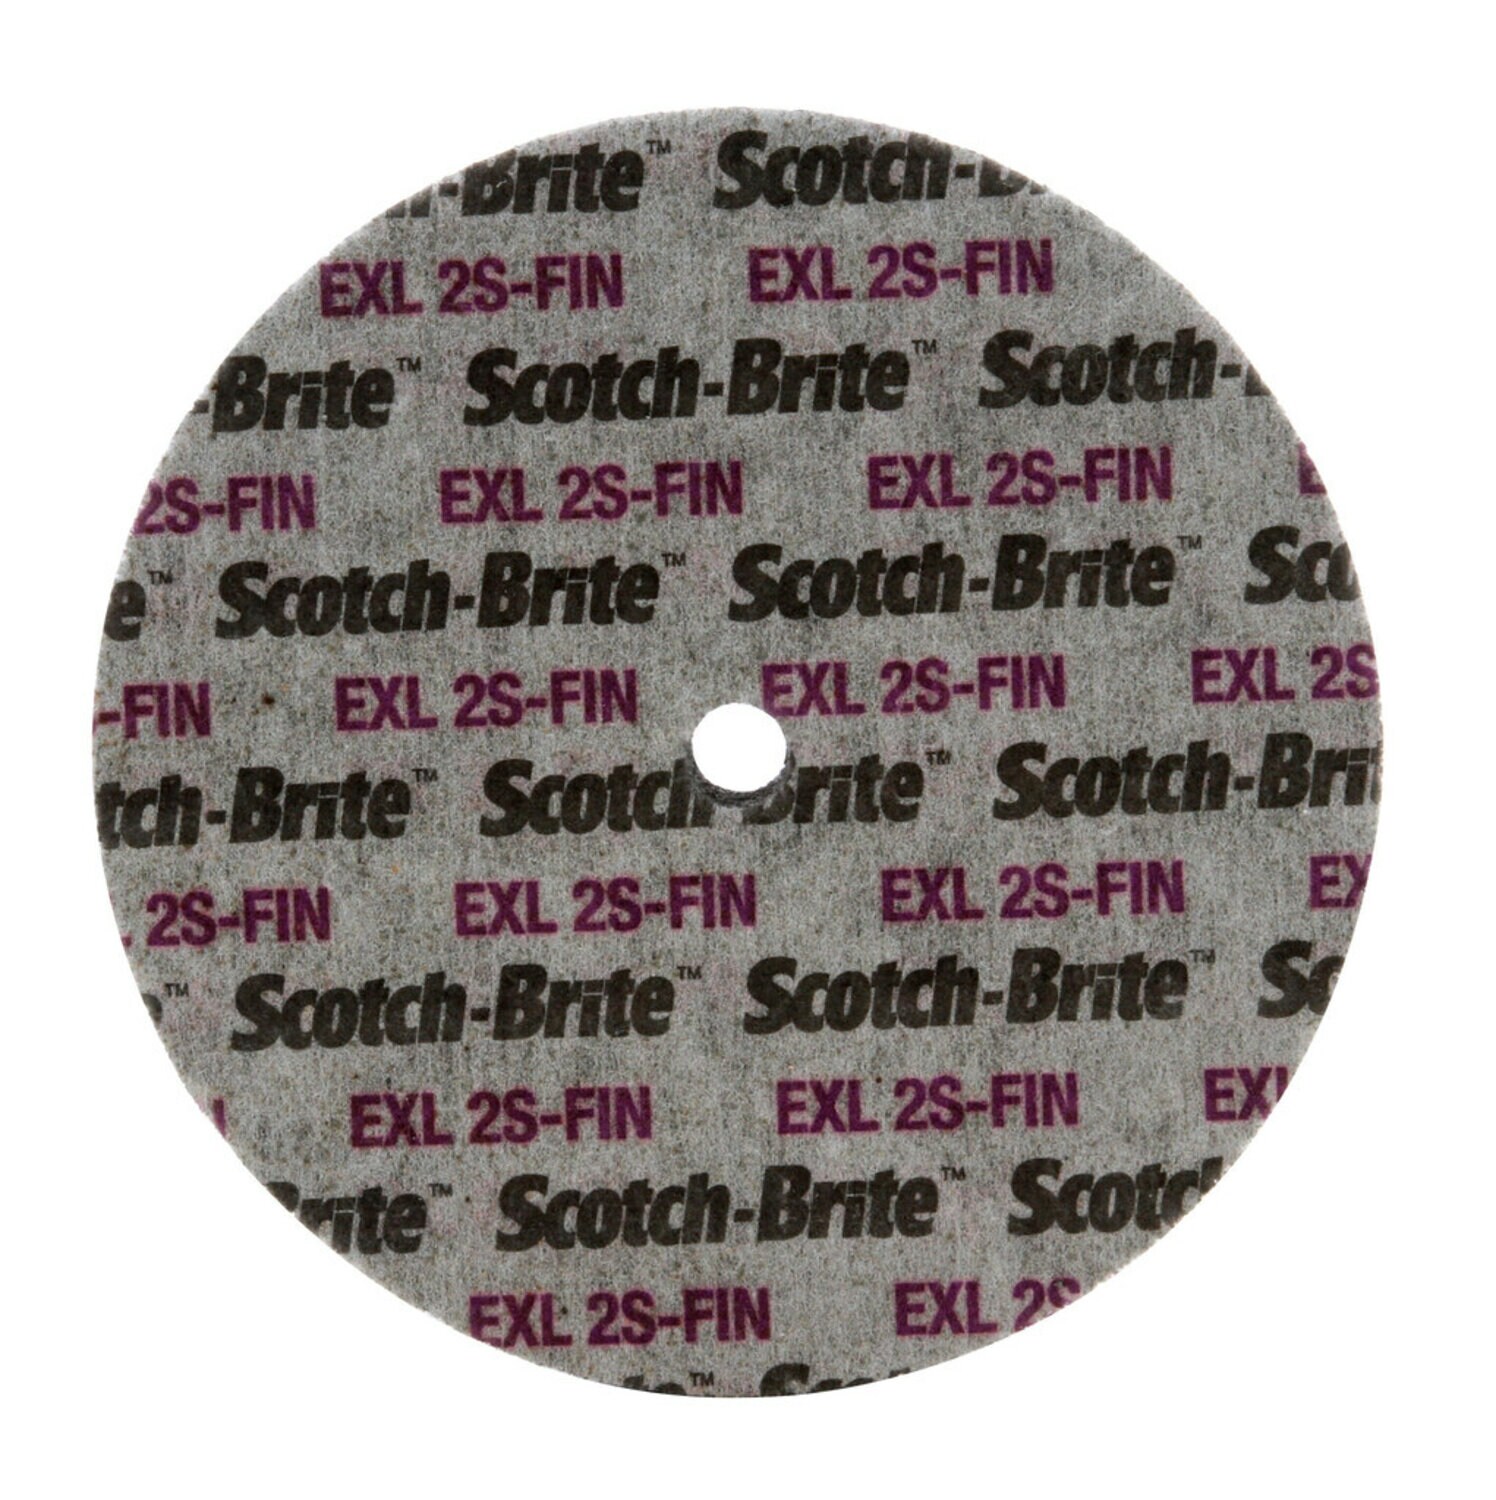 7010366223 - Scotch-Brite EXL Unitized Wheel, XL-UW, 2S Fine, 6 in x 1/4 in x 1 in,
SPR 17773A, 8 ea/Case